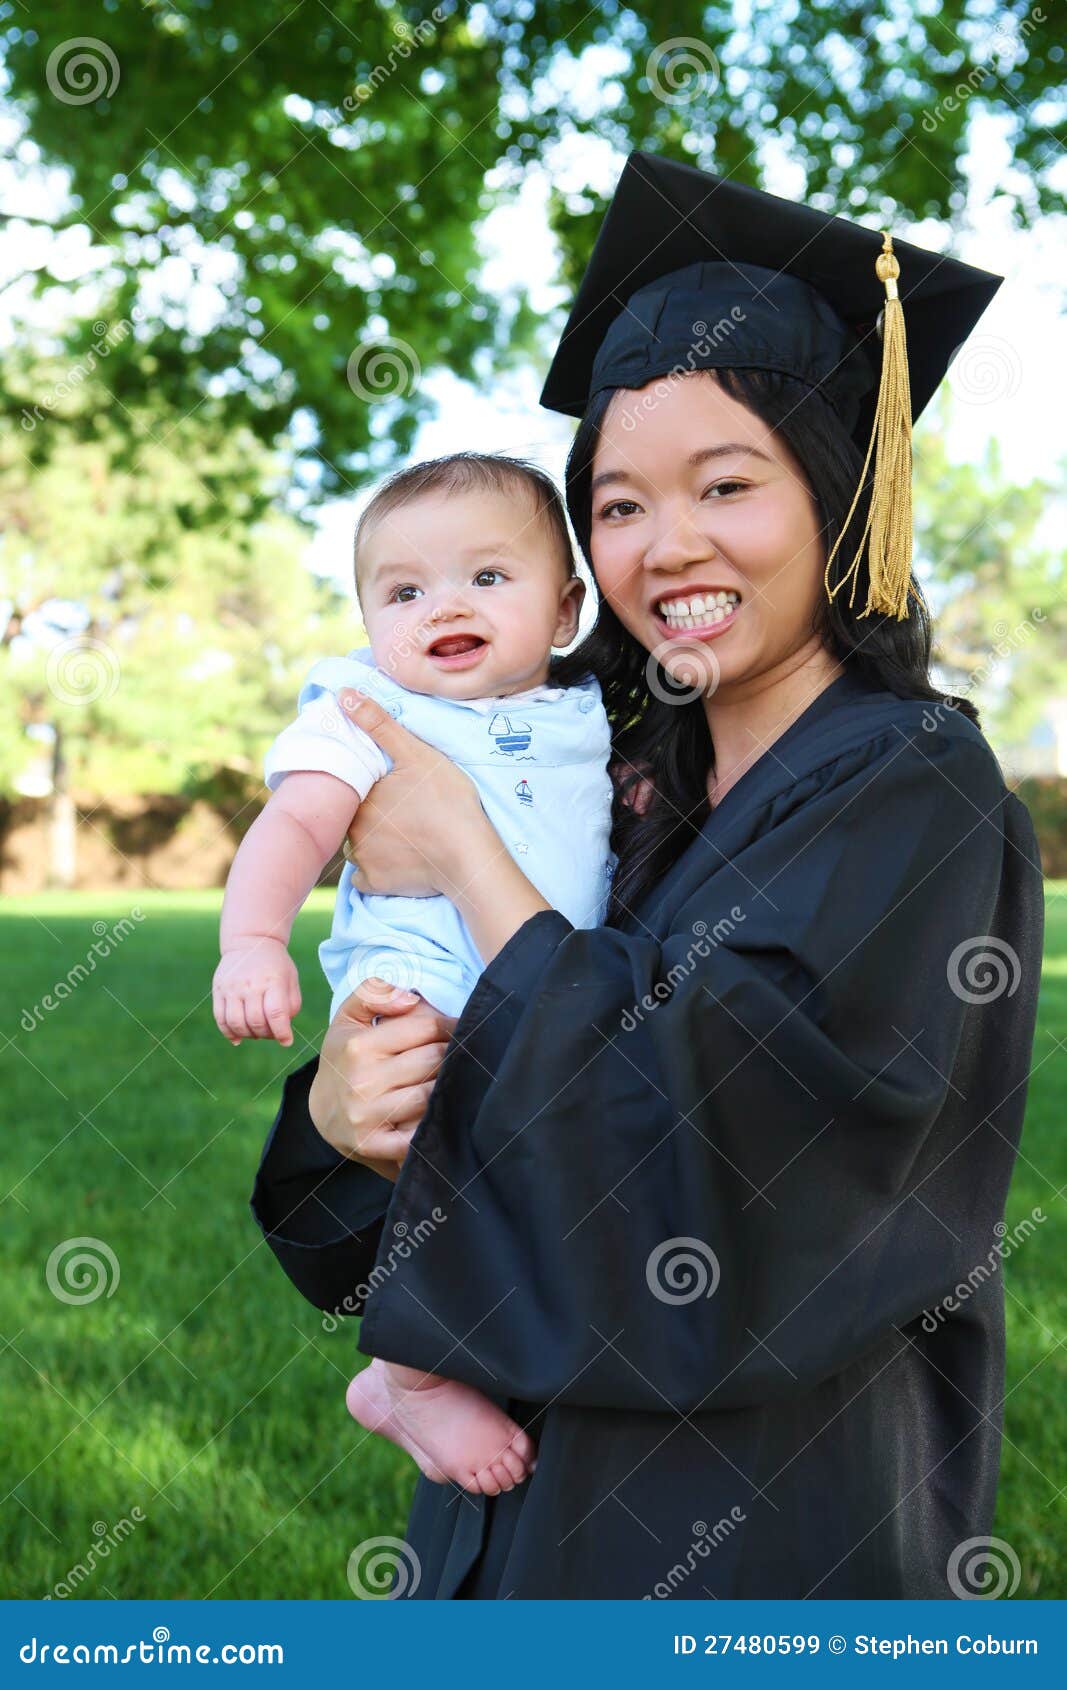 Graduation attire Children's Nursery Graduation Gown and Cap - India | Ubuy